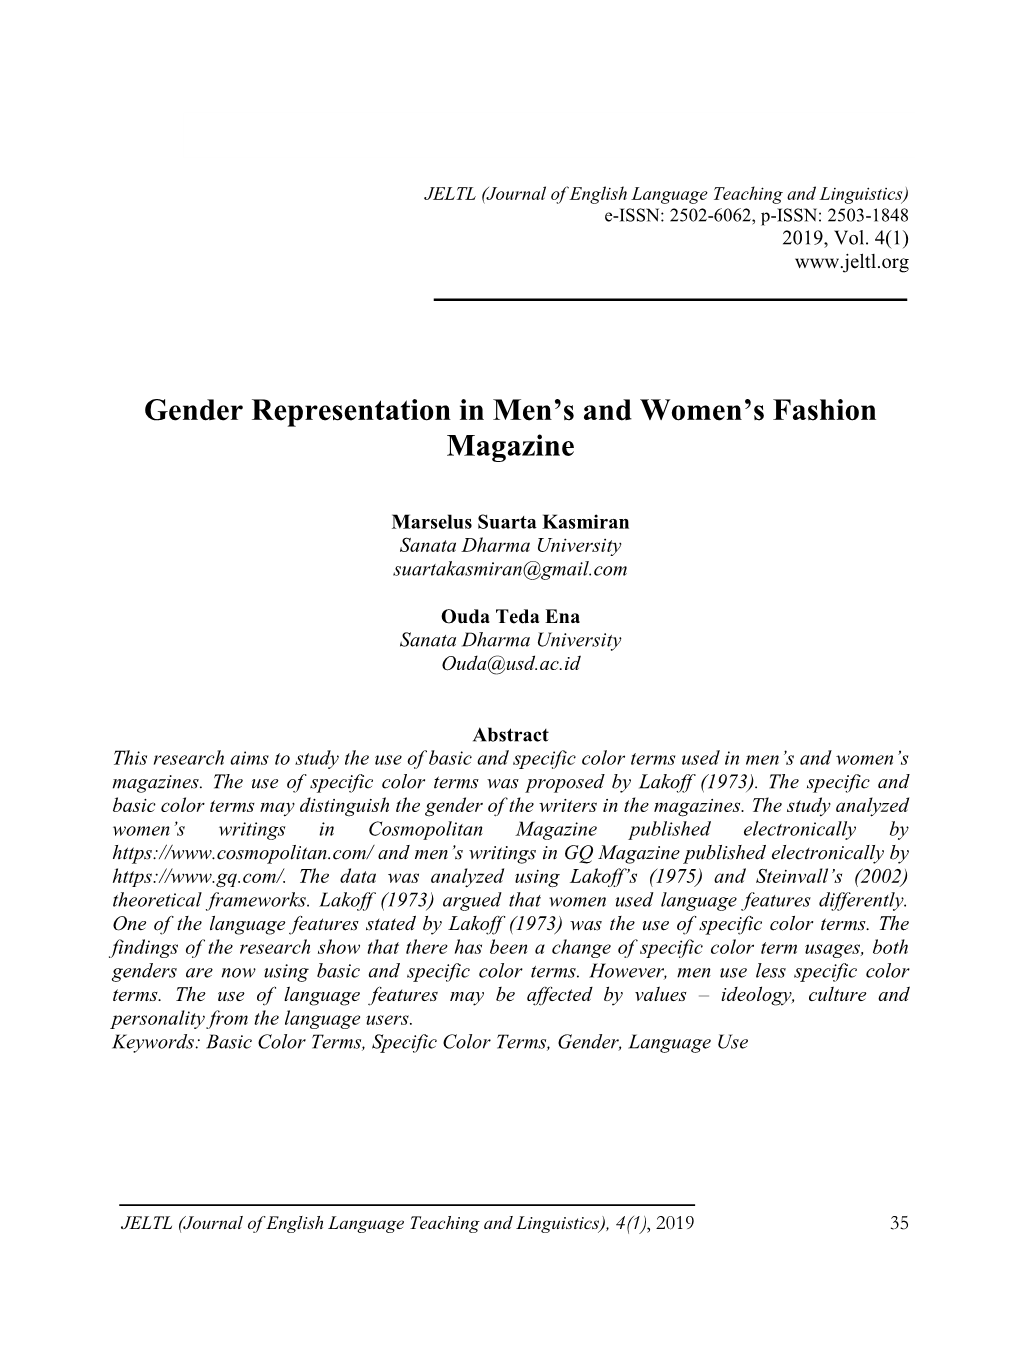 Gender Representation in Men's and Women's Fashion Magazine